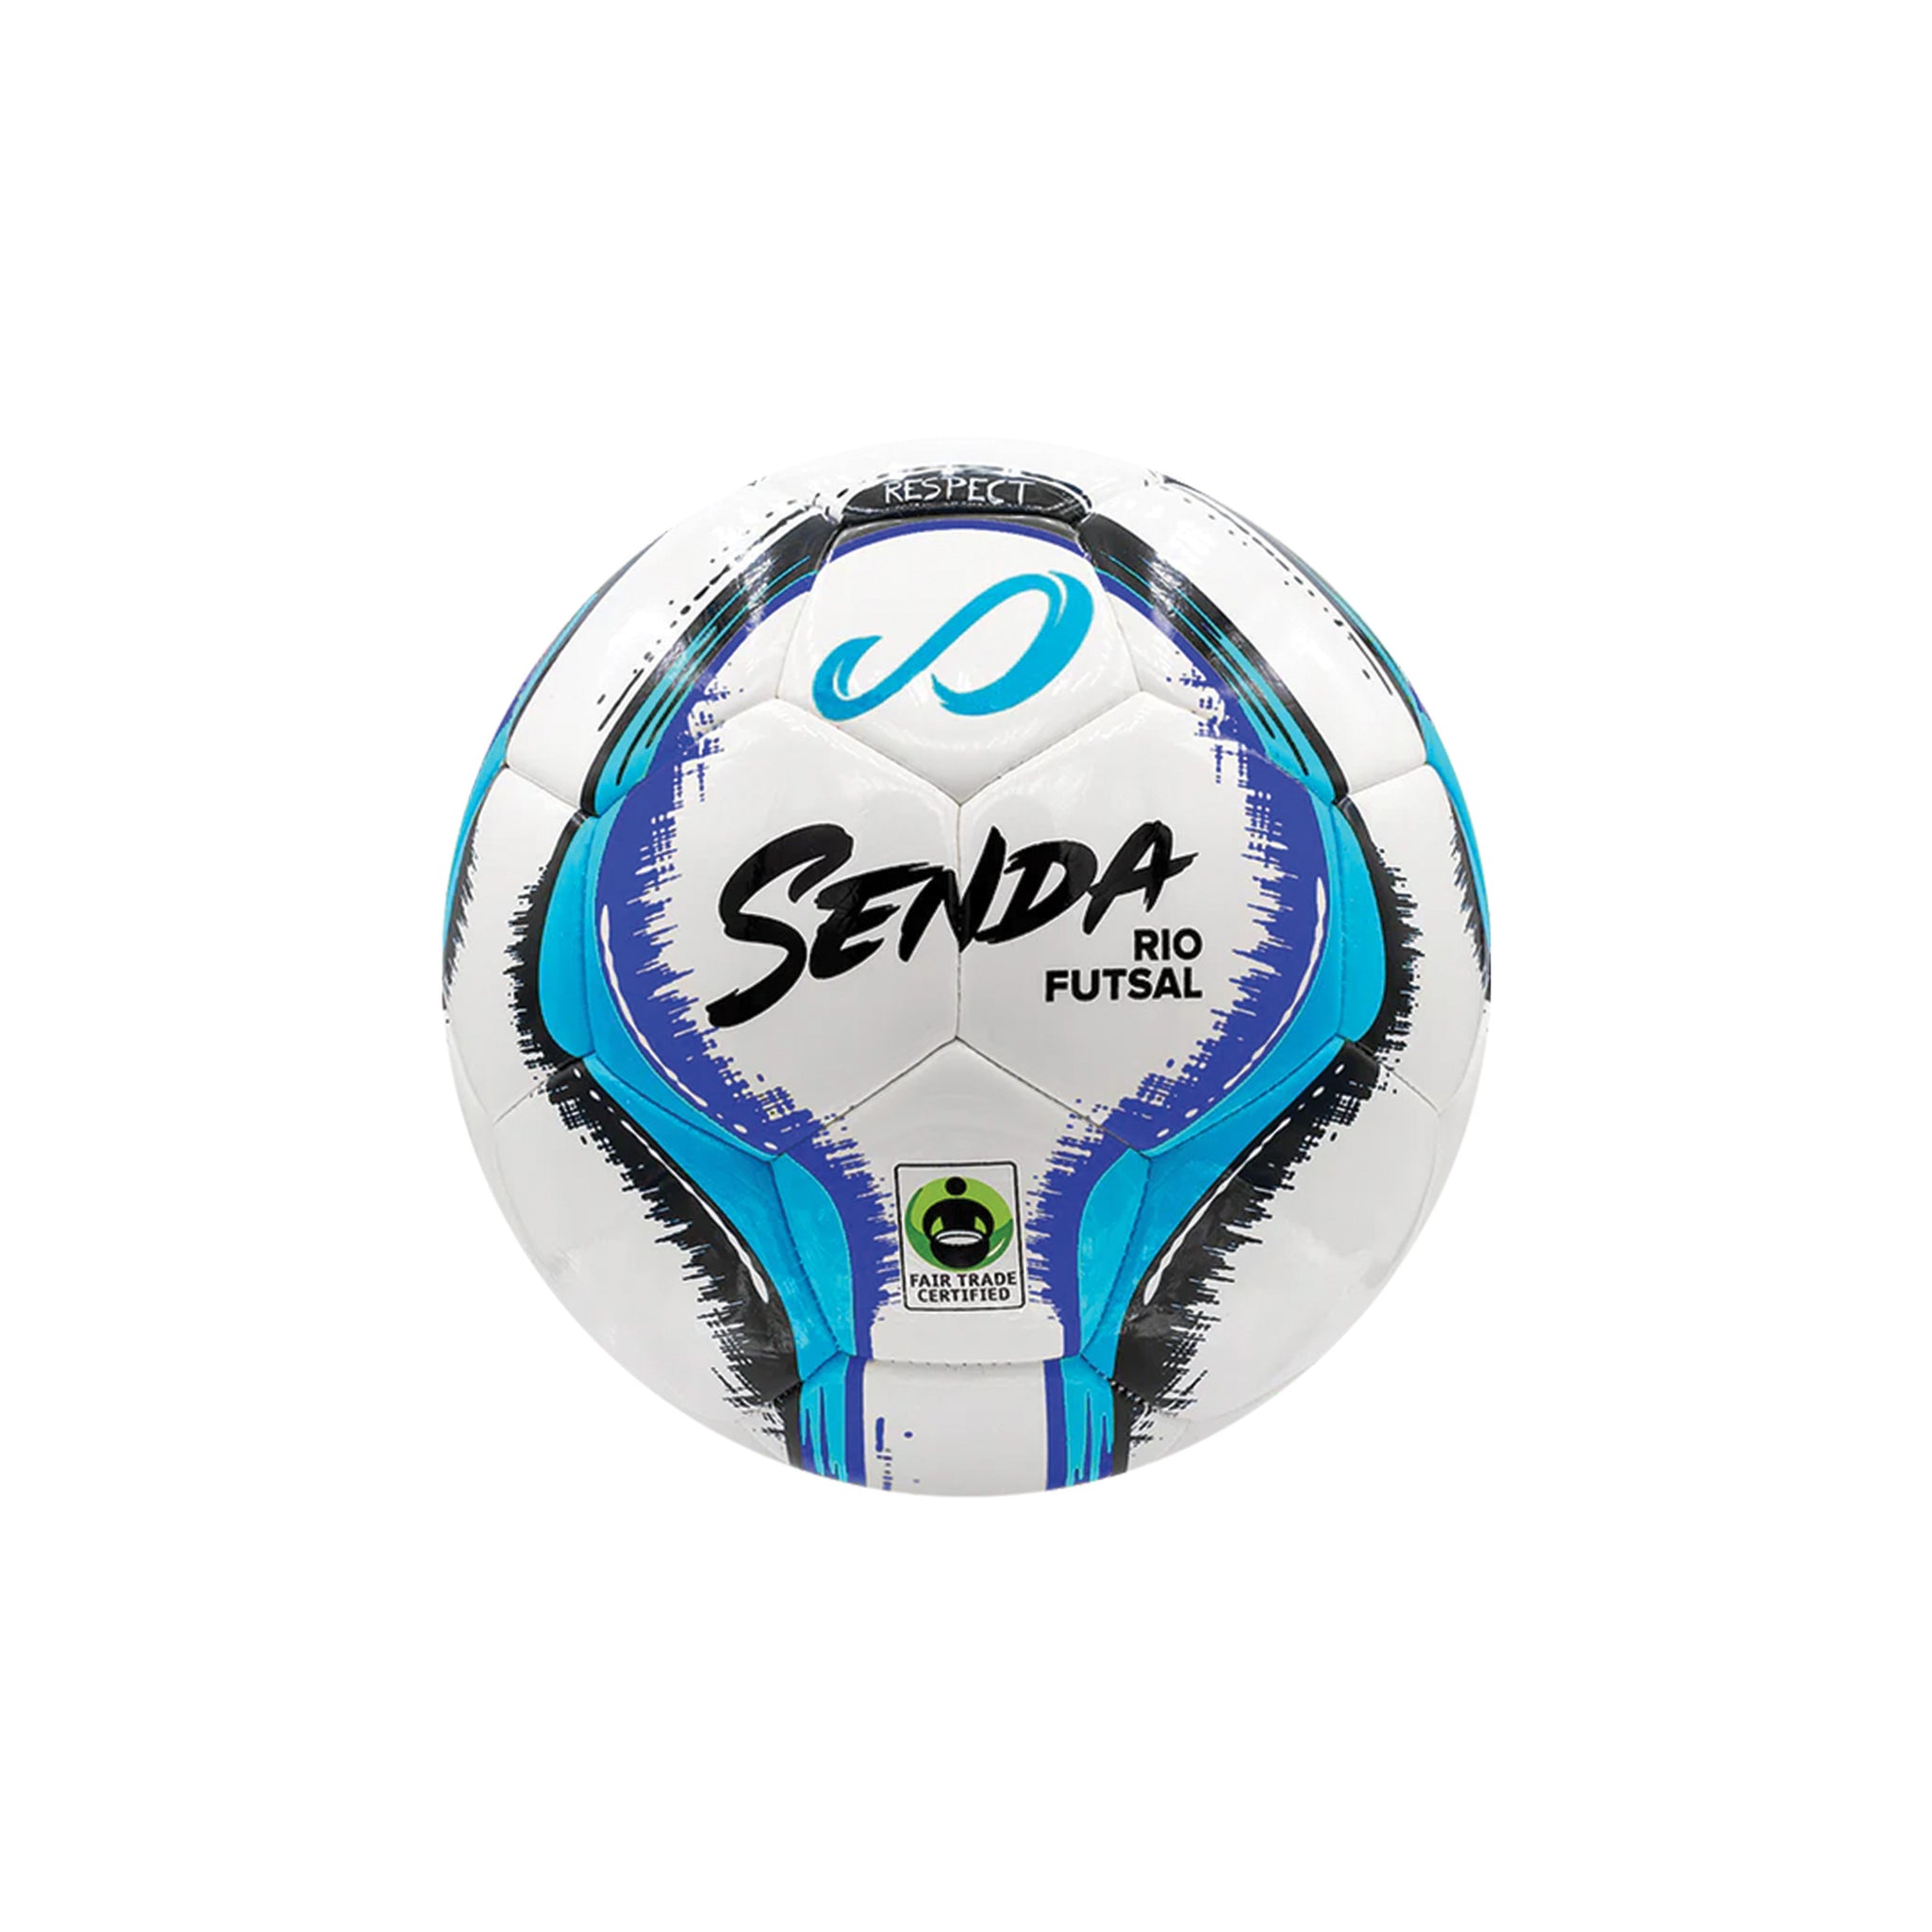 SENDA Rio Match Futsal Ball